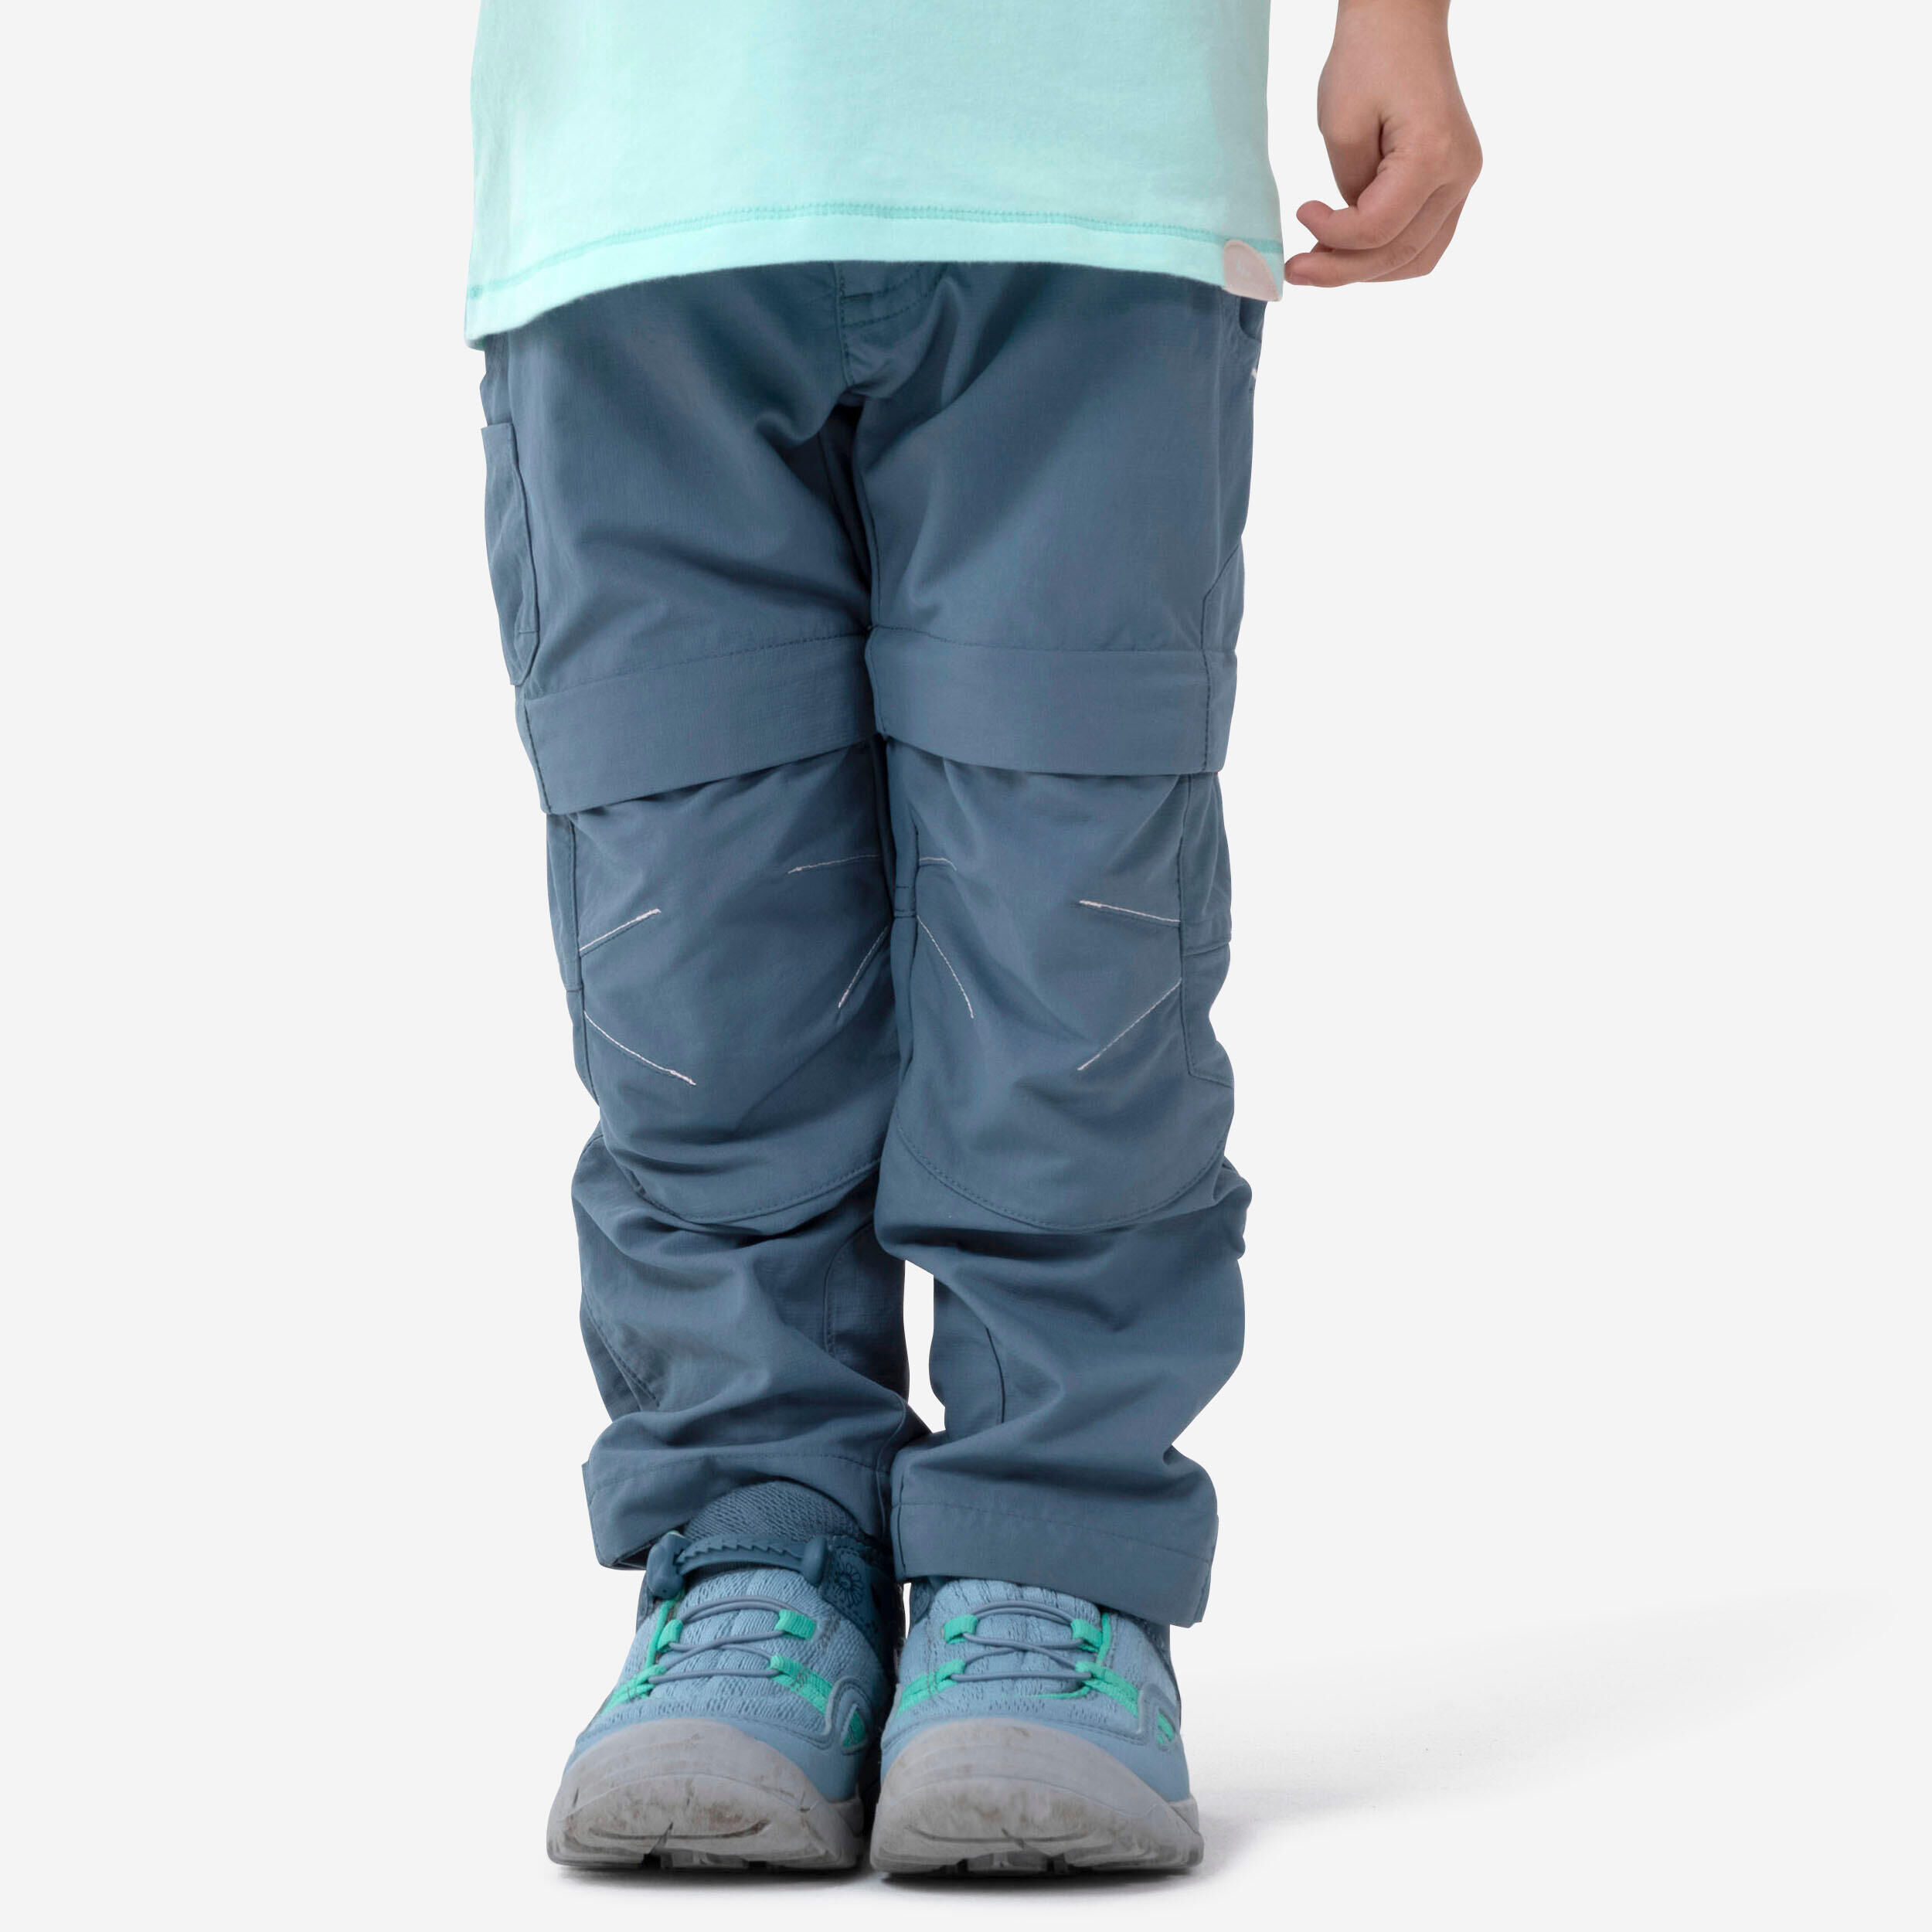 QUECHUA Kids’ Modular Hiking Trousers - MH500 KID Aged 2-6 YEARS